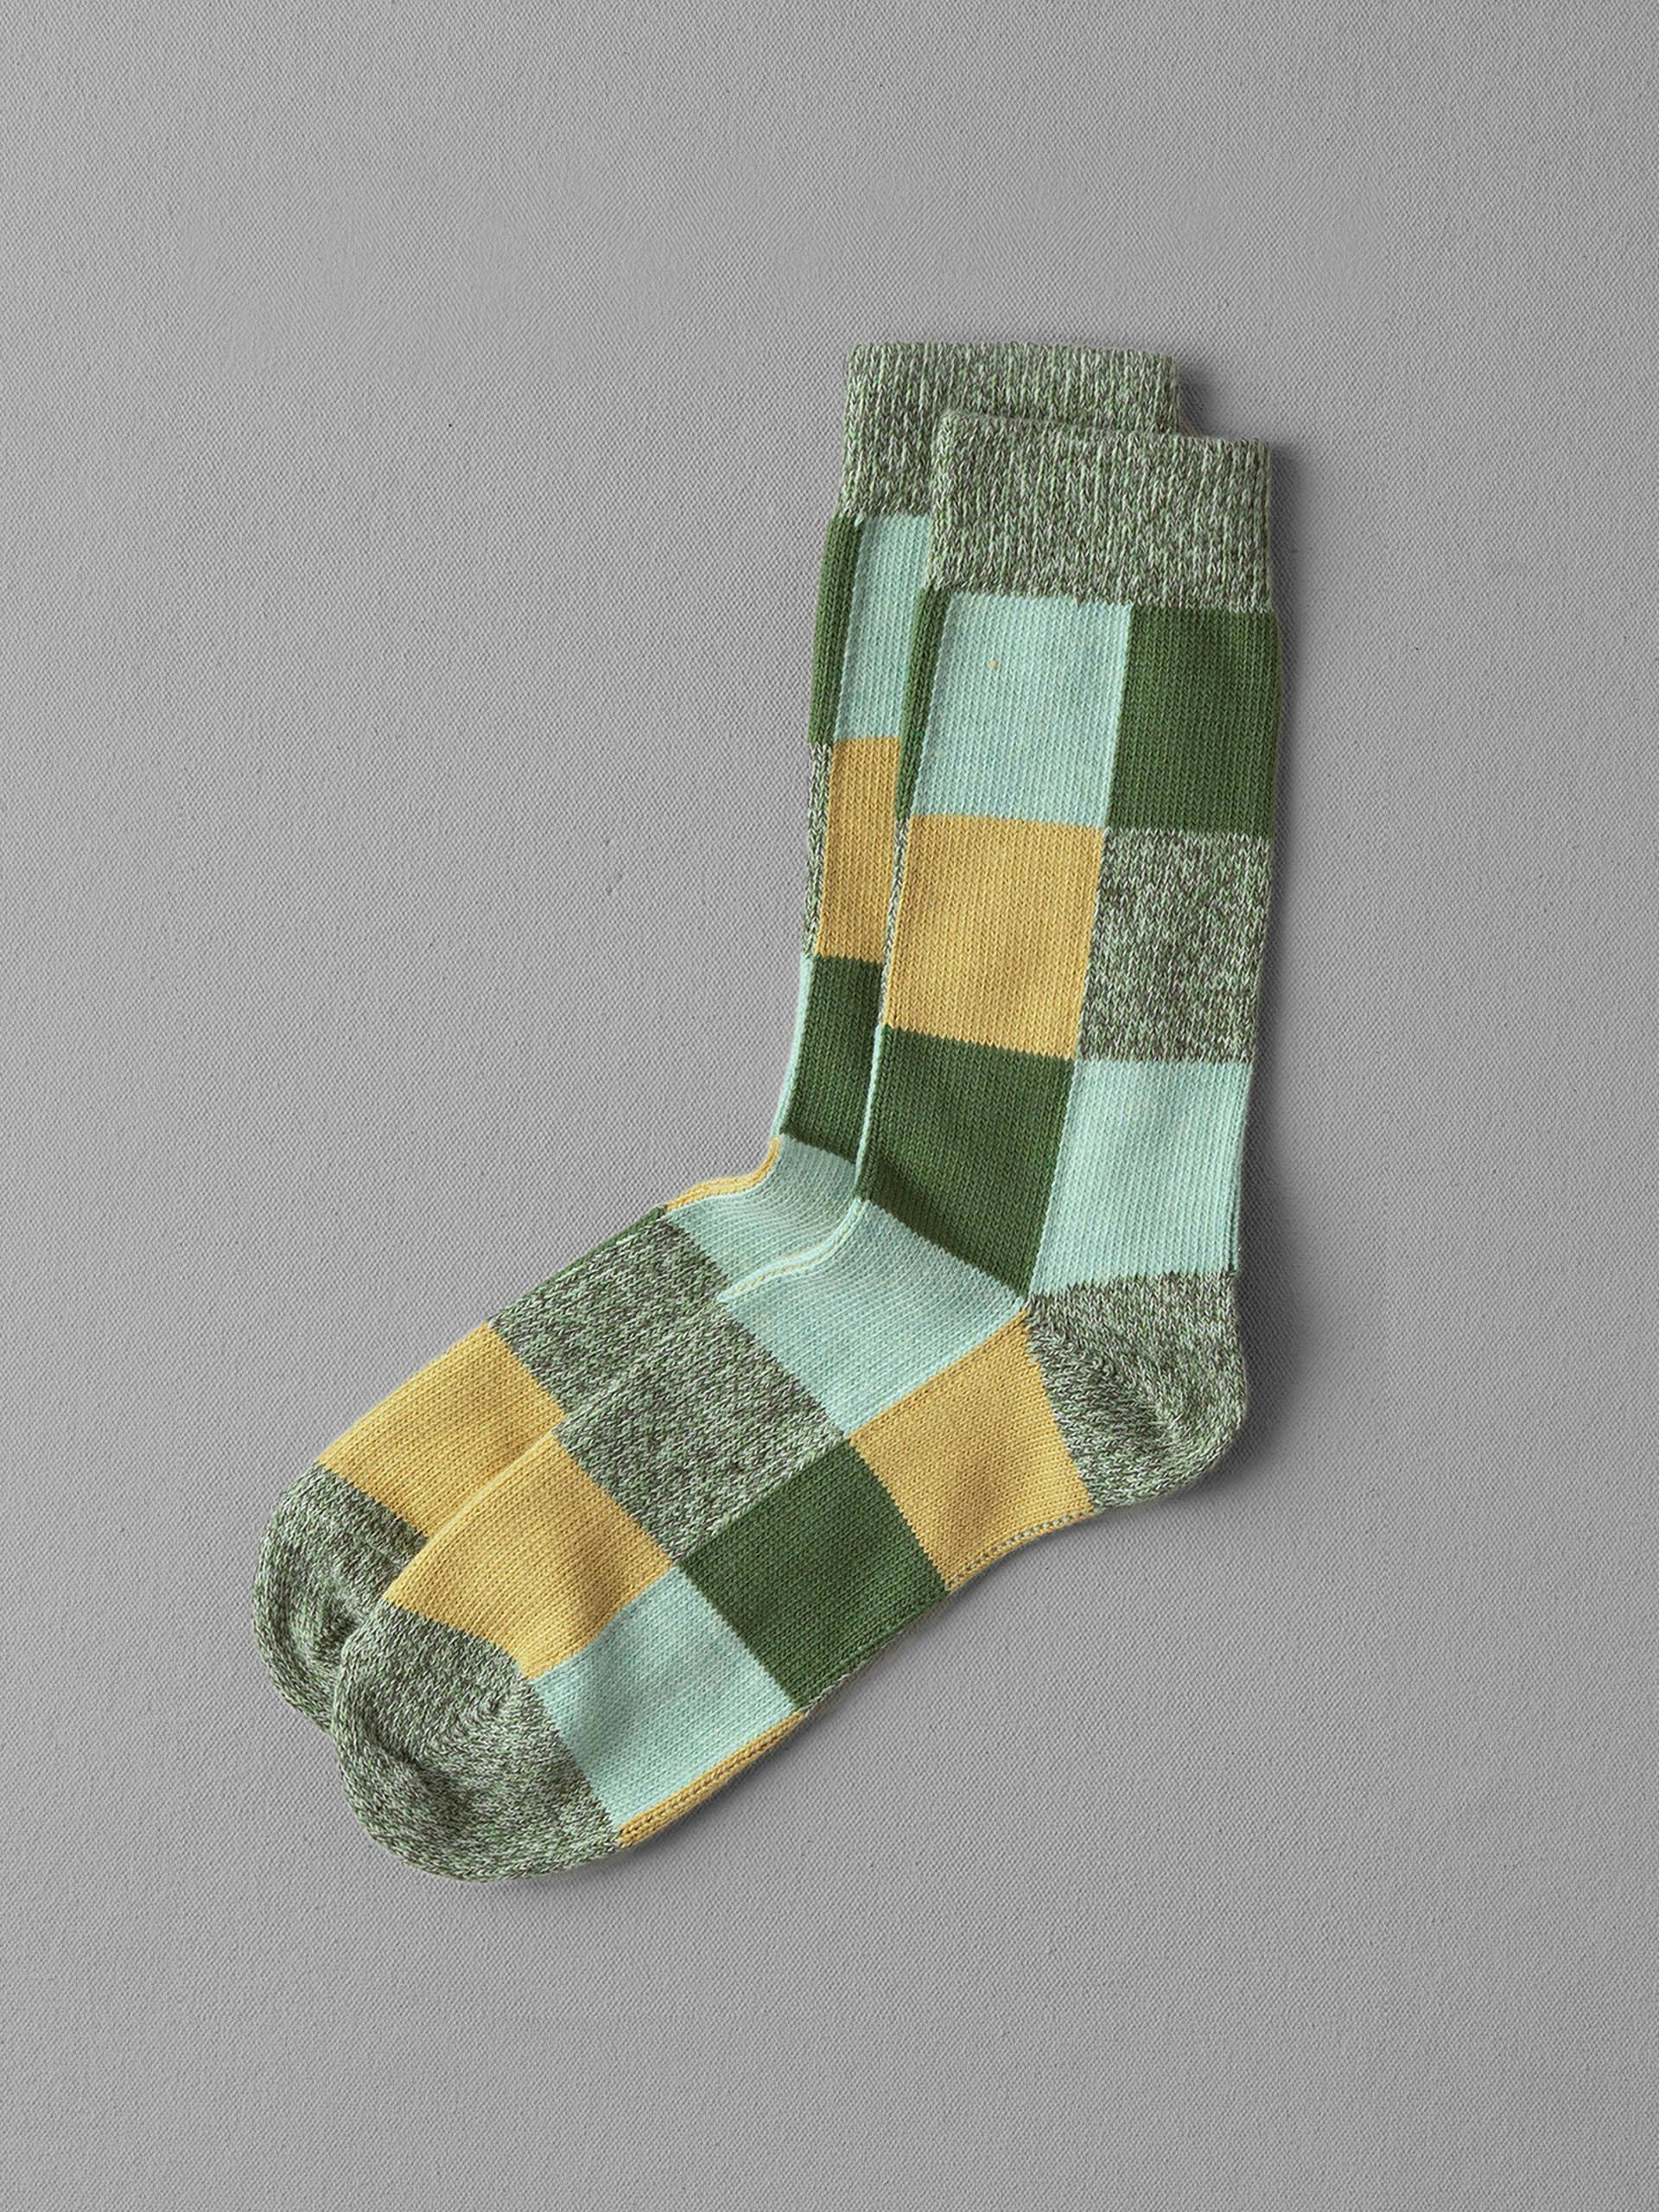 Rove cotton patchwork socks